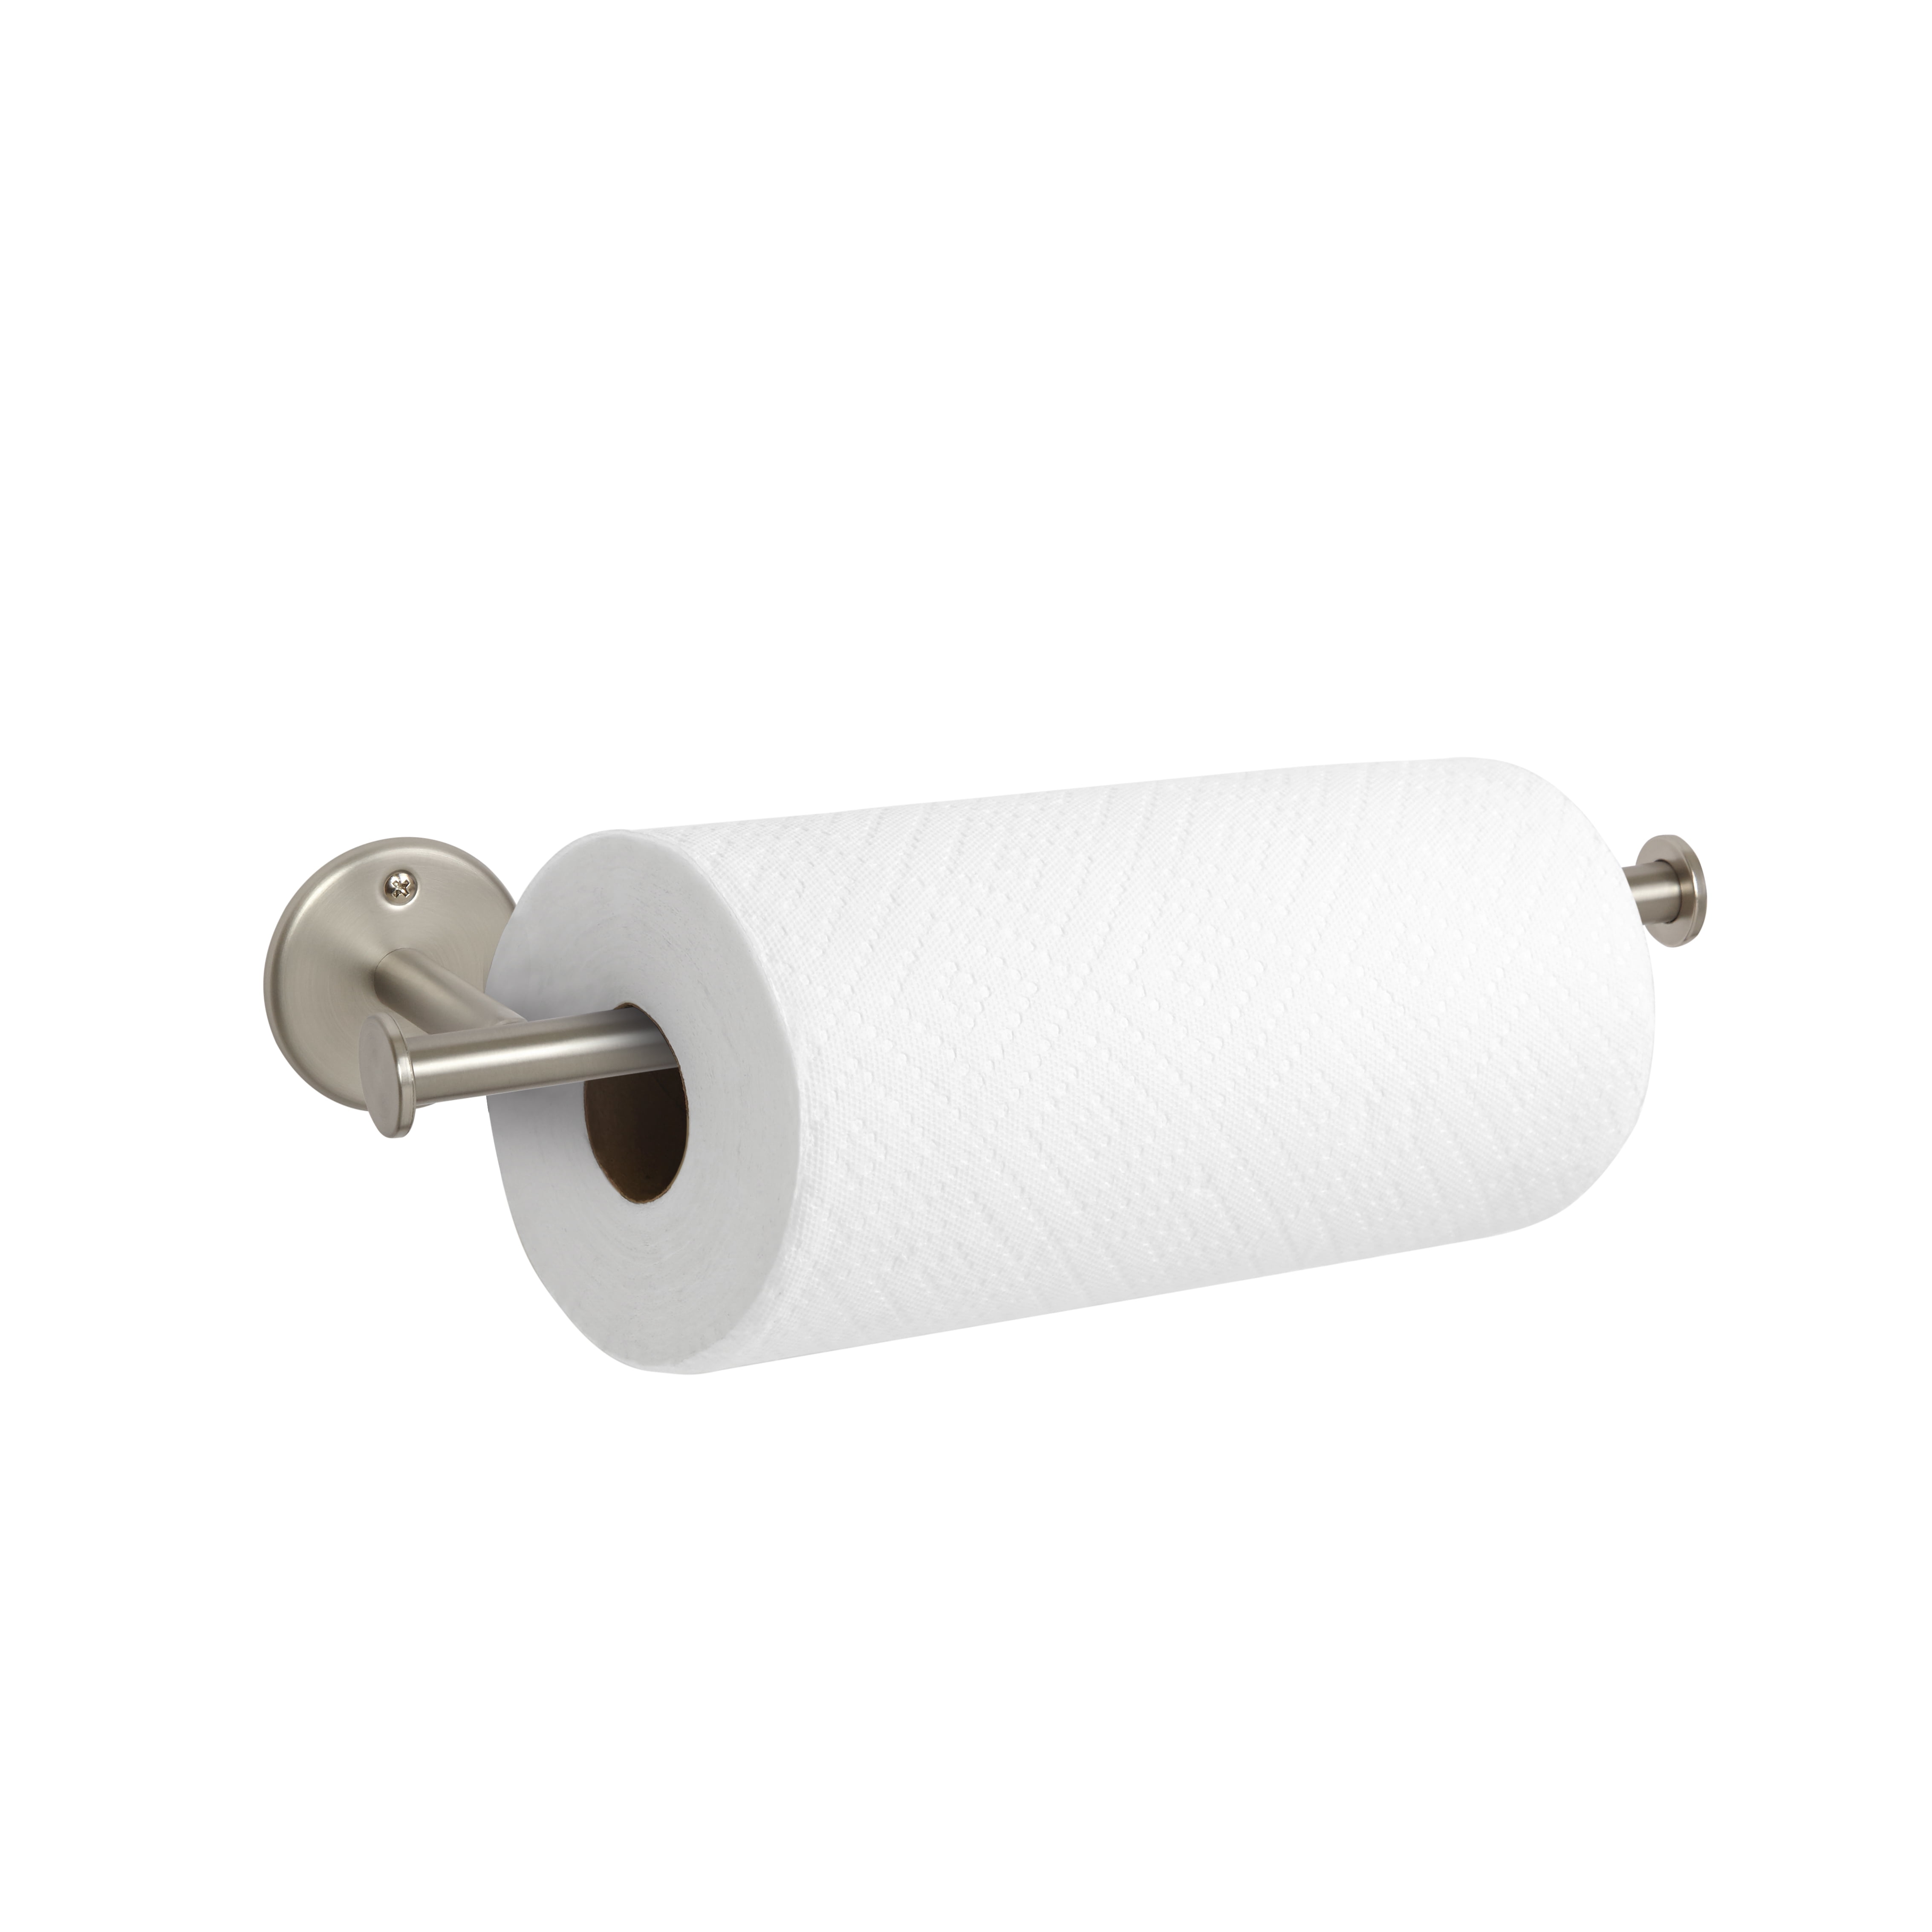 White Rope Paper Towel Holder – Mikasa